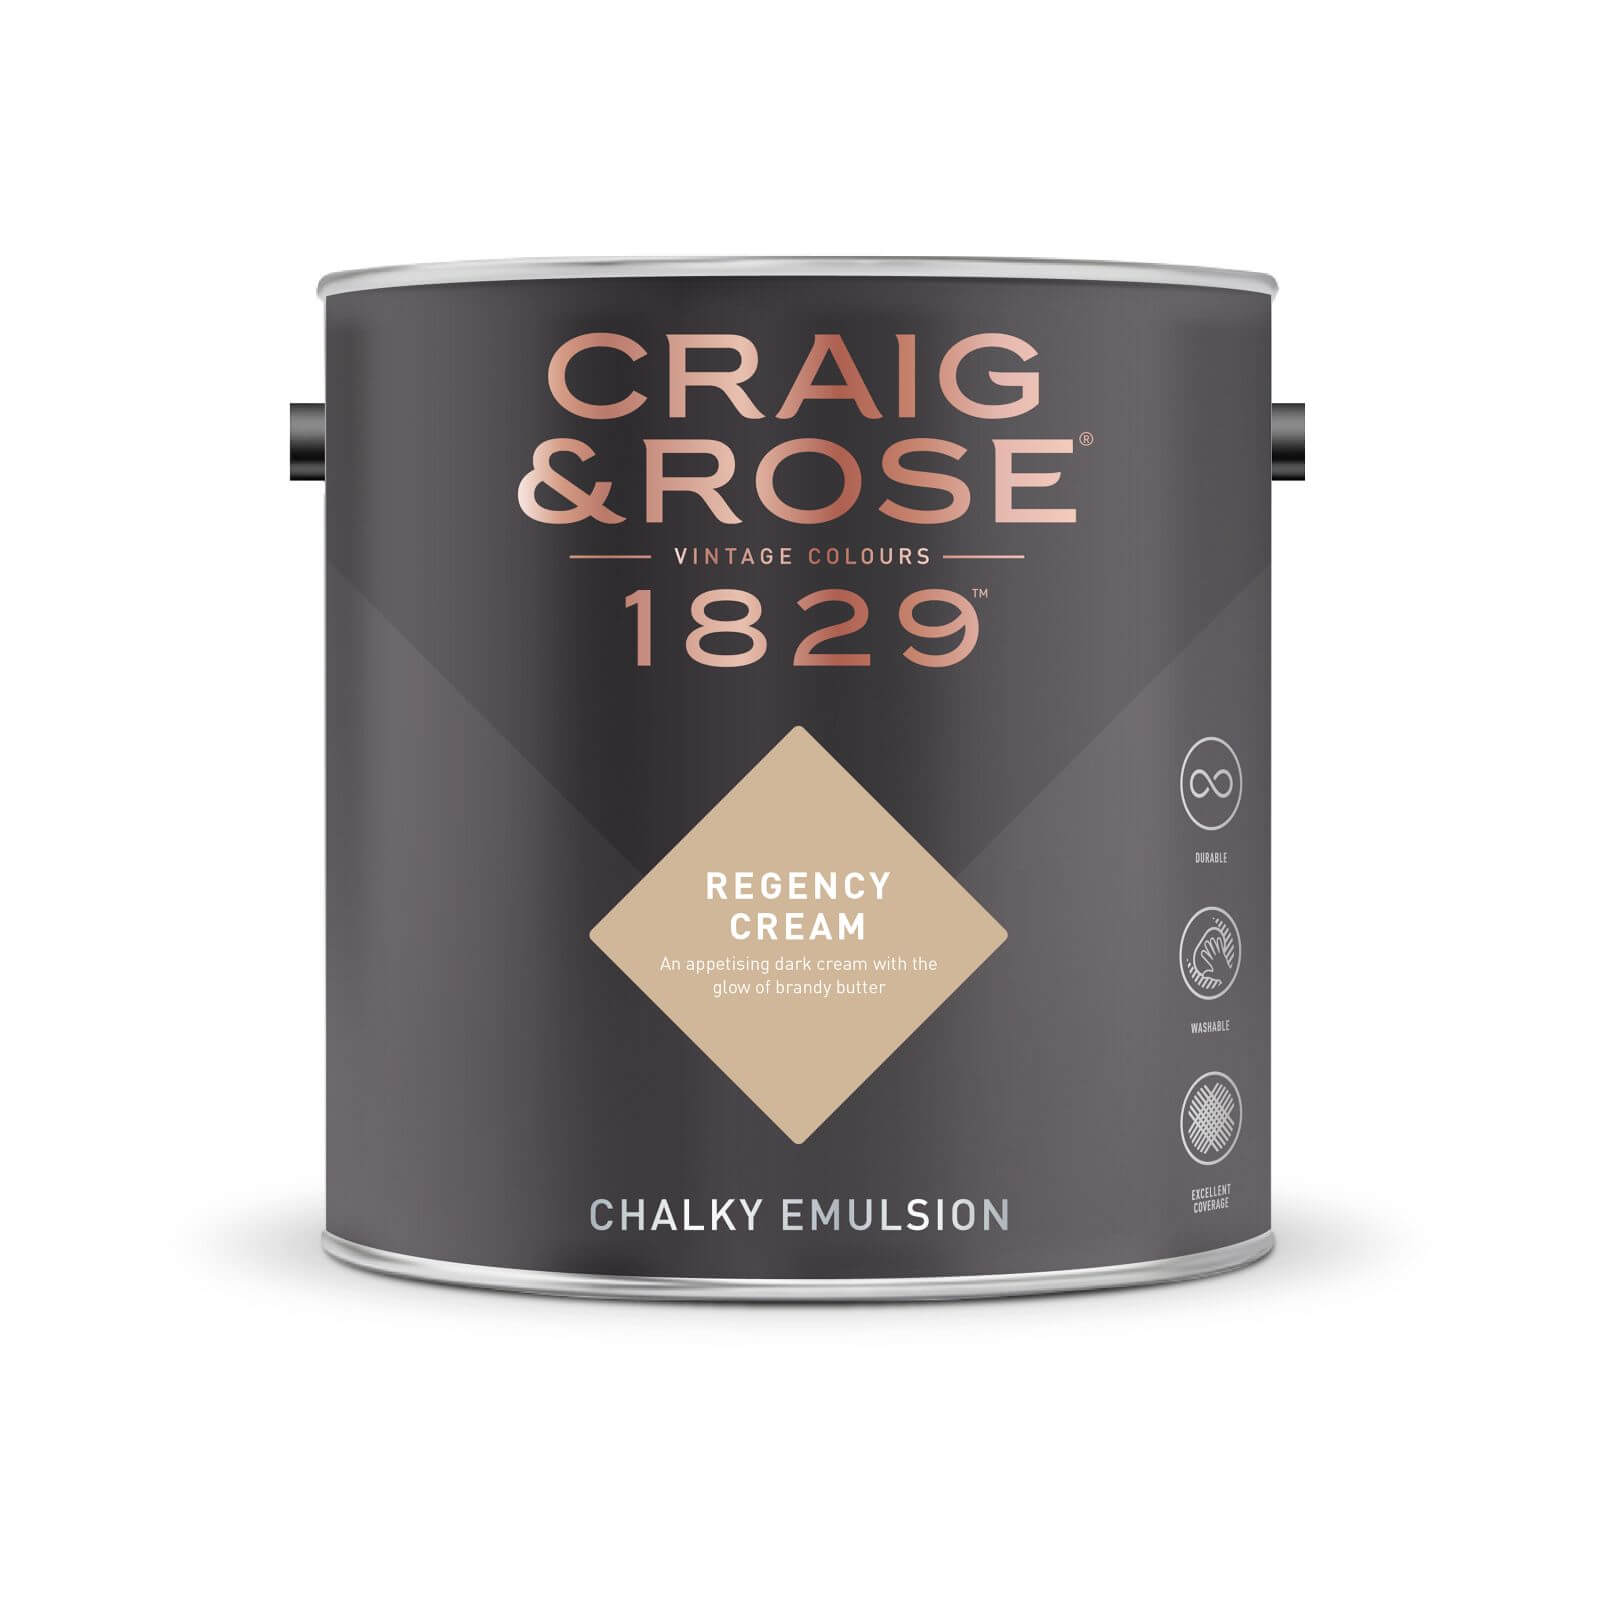 Craig & Rose 1829 Chalky Emulsion Paint Regency Cream - Tester 50ml